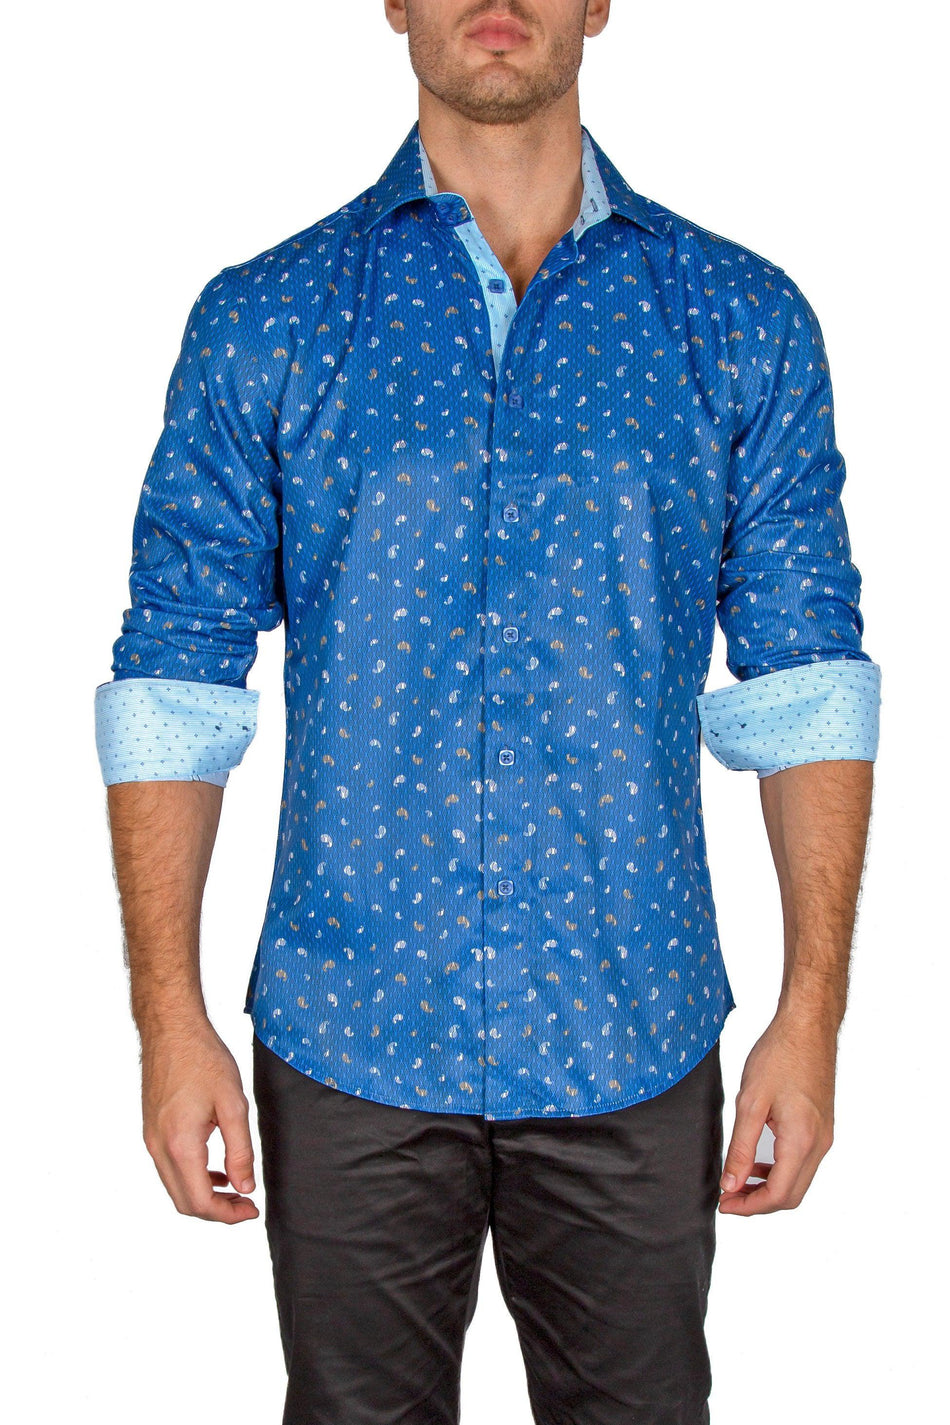 182246-mens-royal-blue-button-up-long-sleeve-dress-shirt